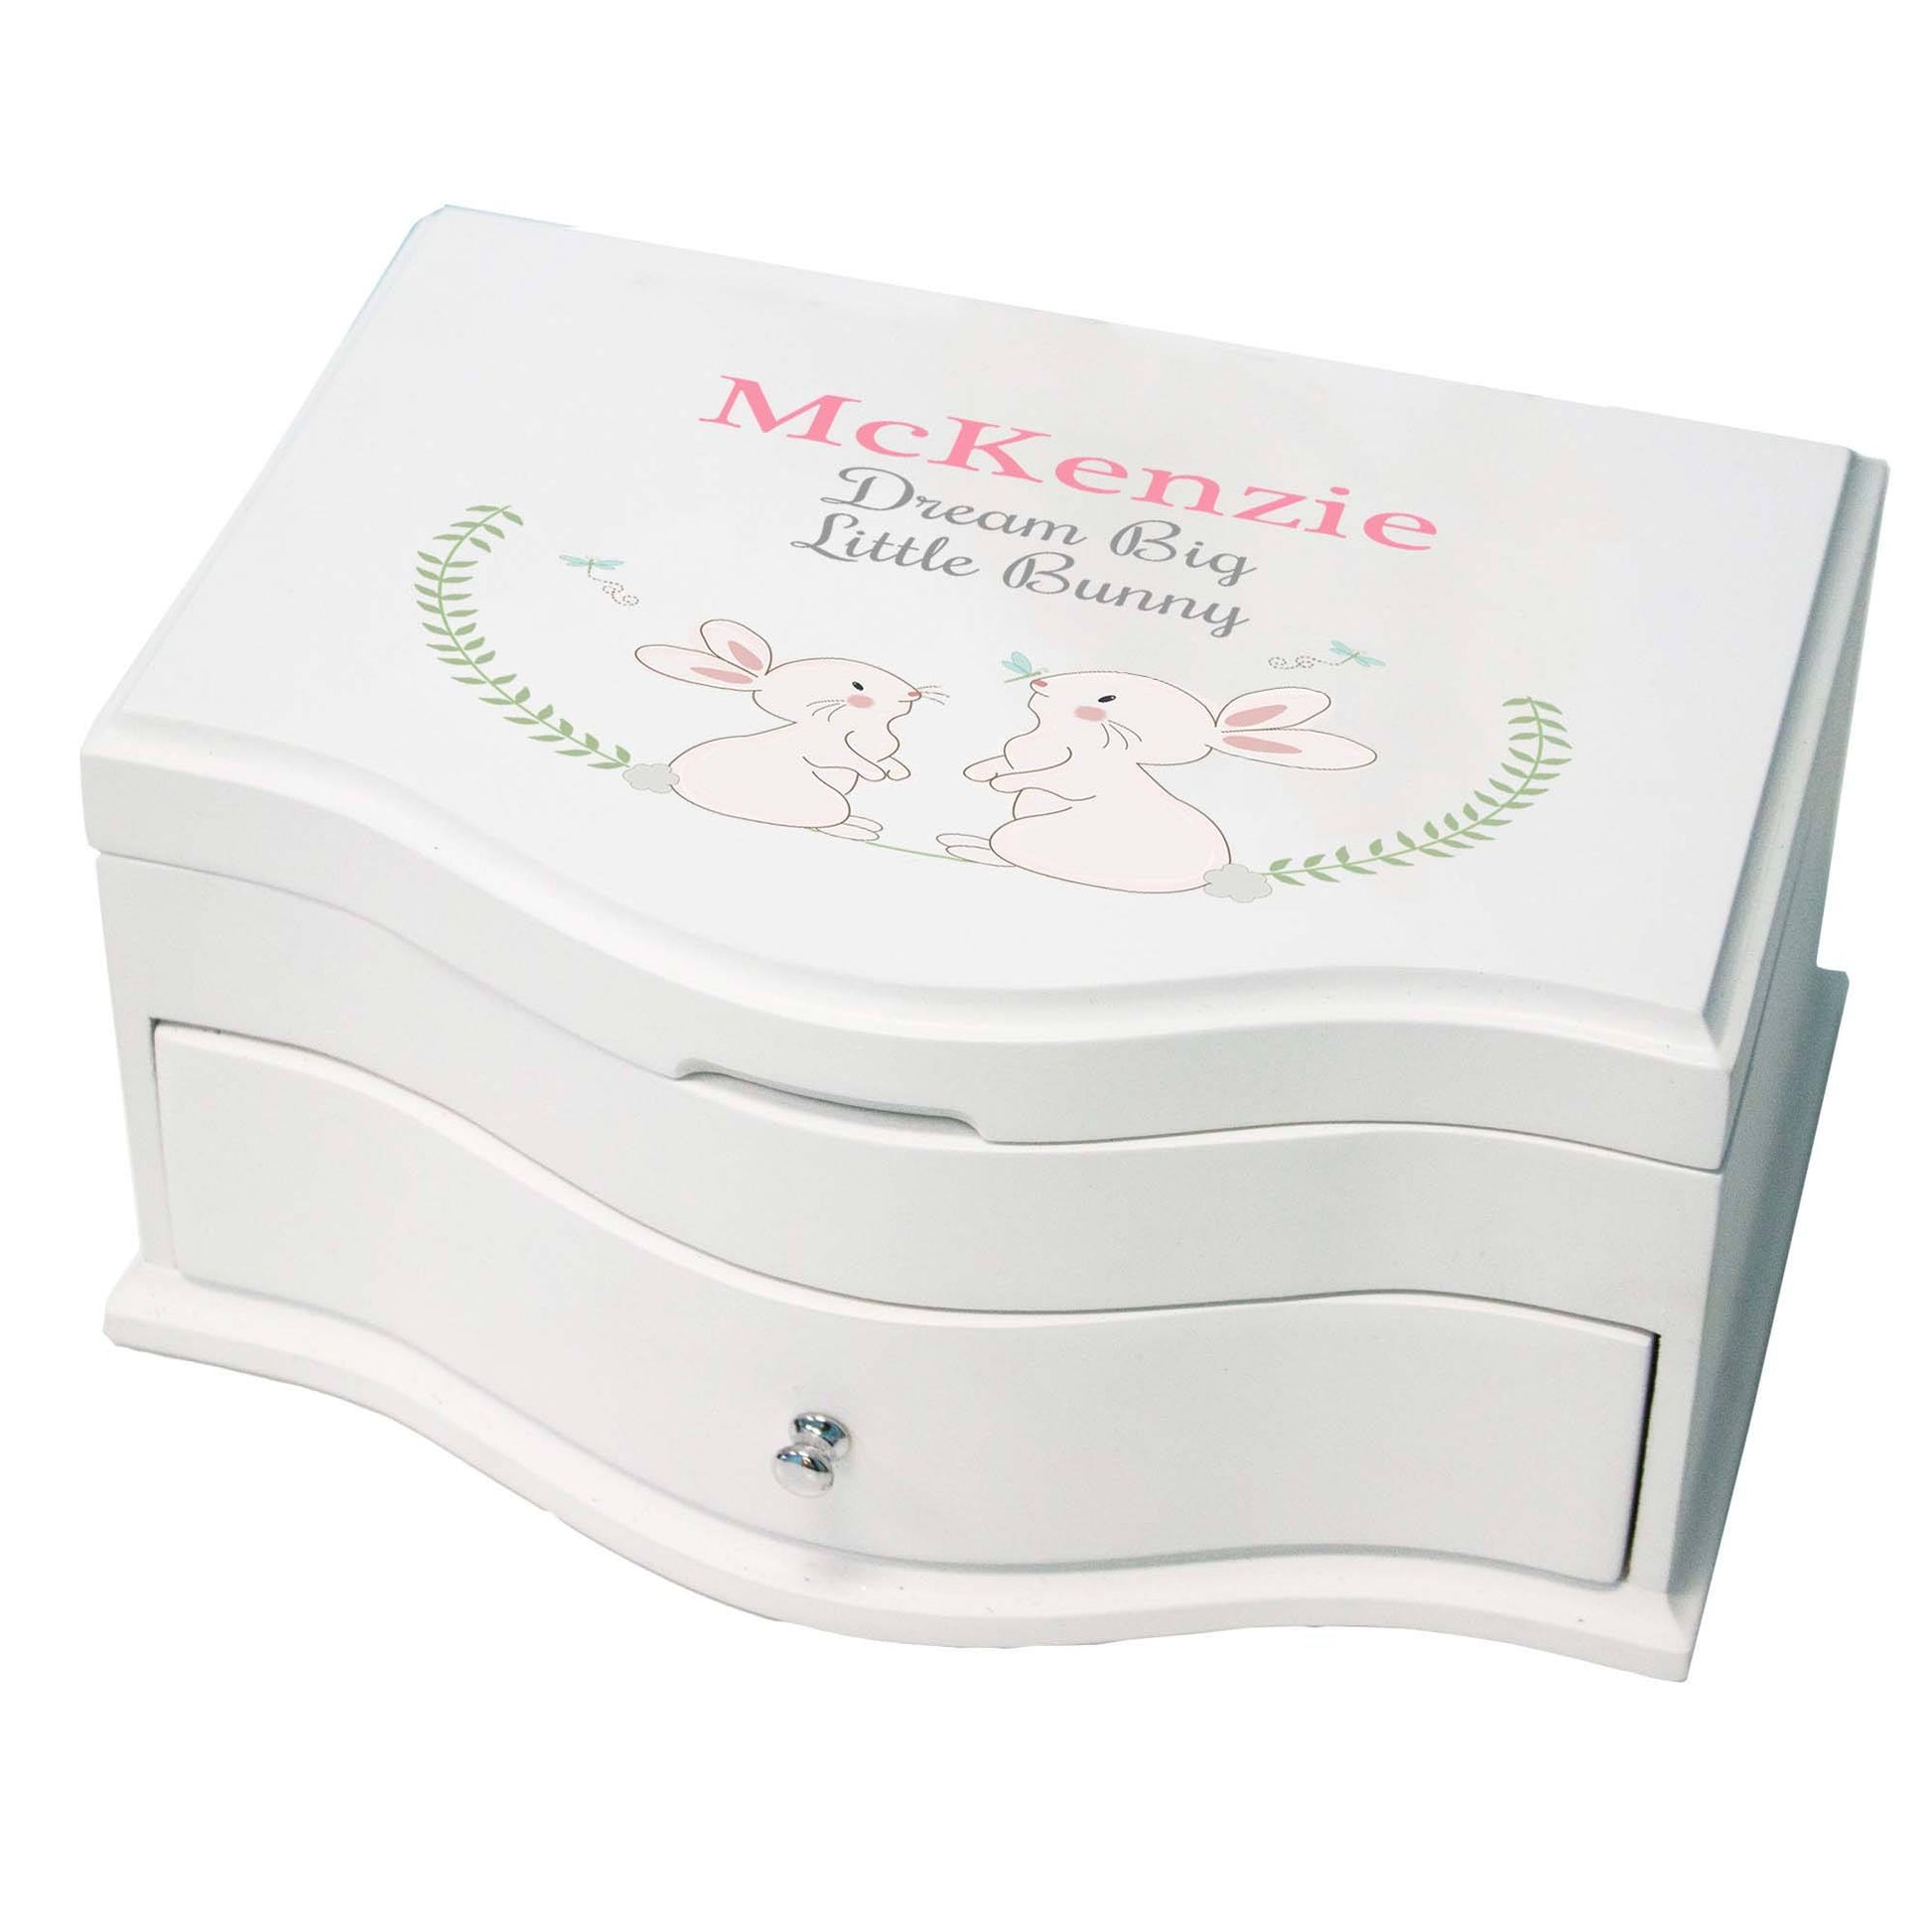 Princess Girls Jewelry Box with Classic Bunny design